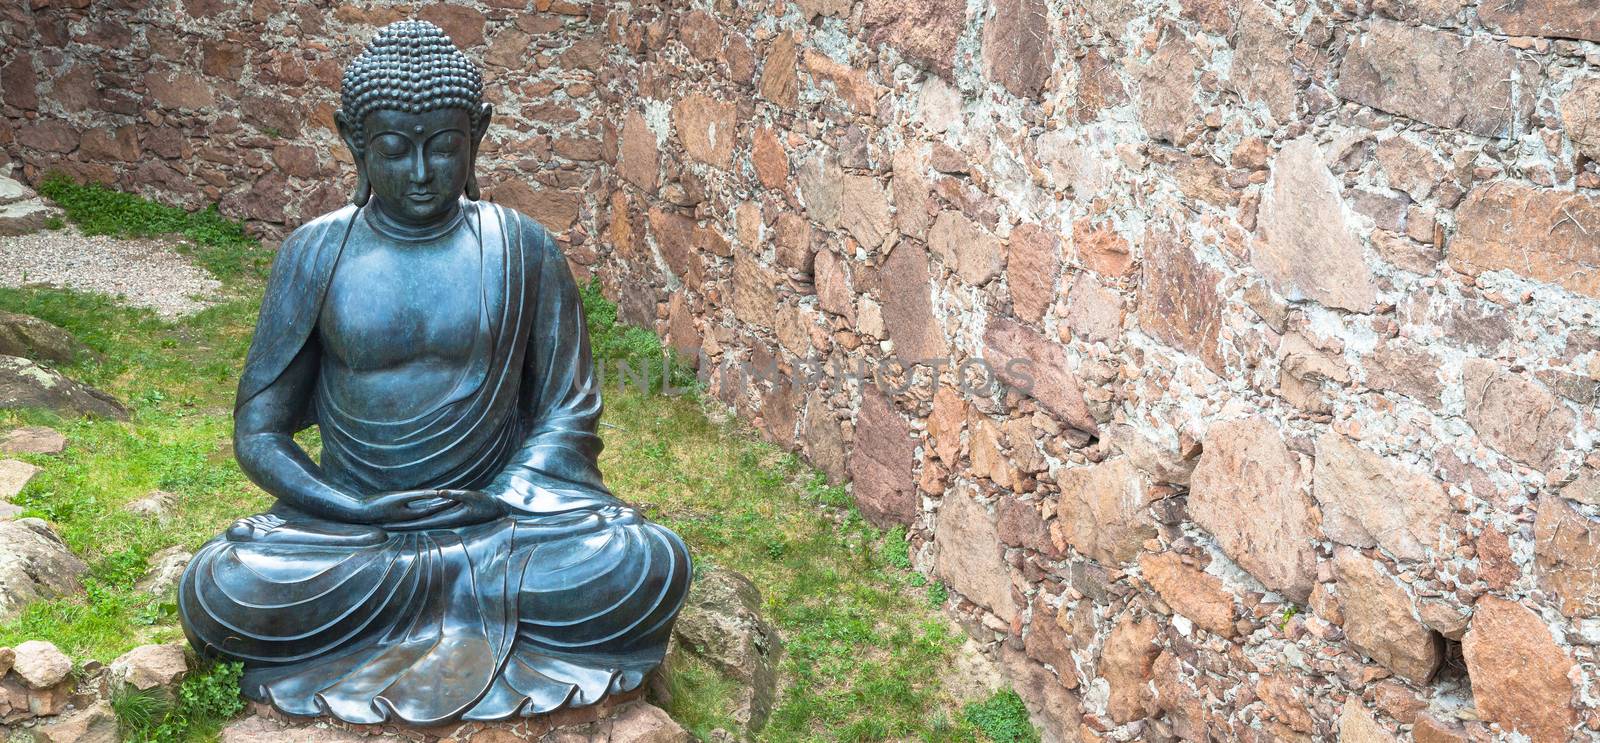 Meditating Buddha Statue  by Perseomedusa